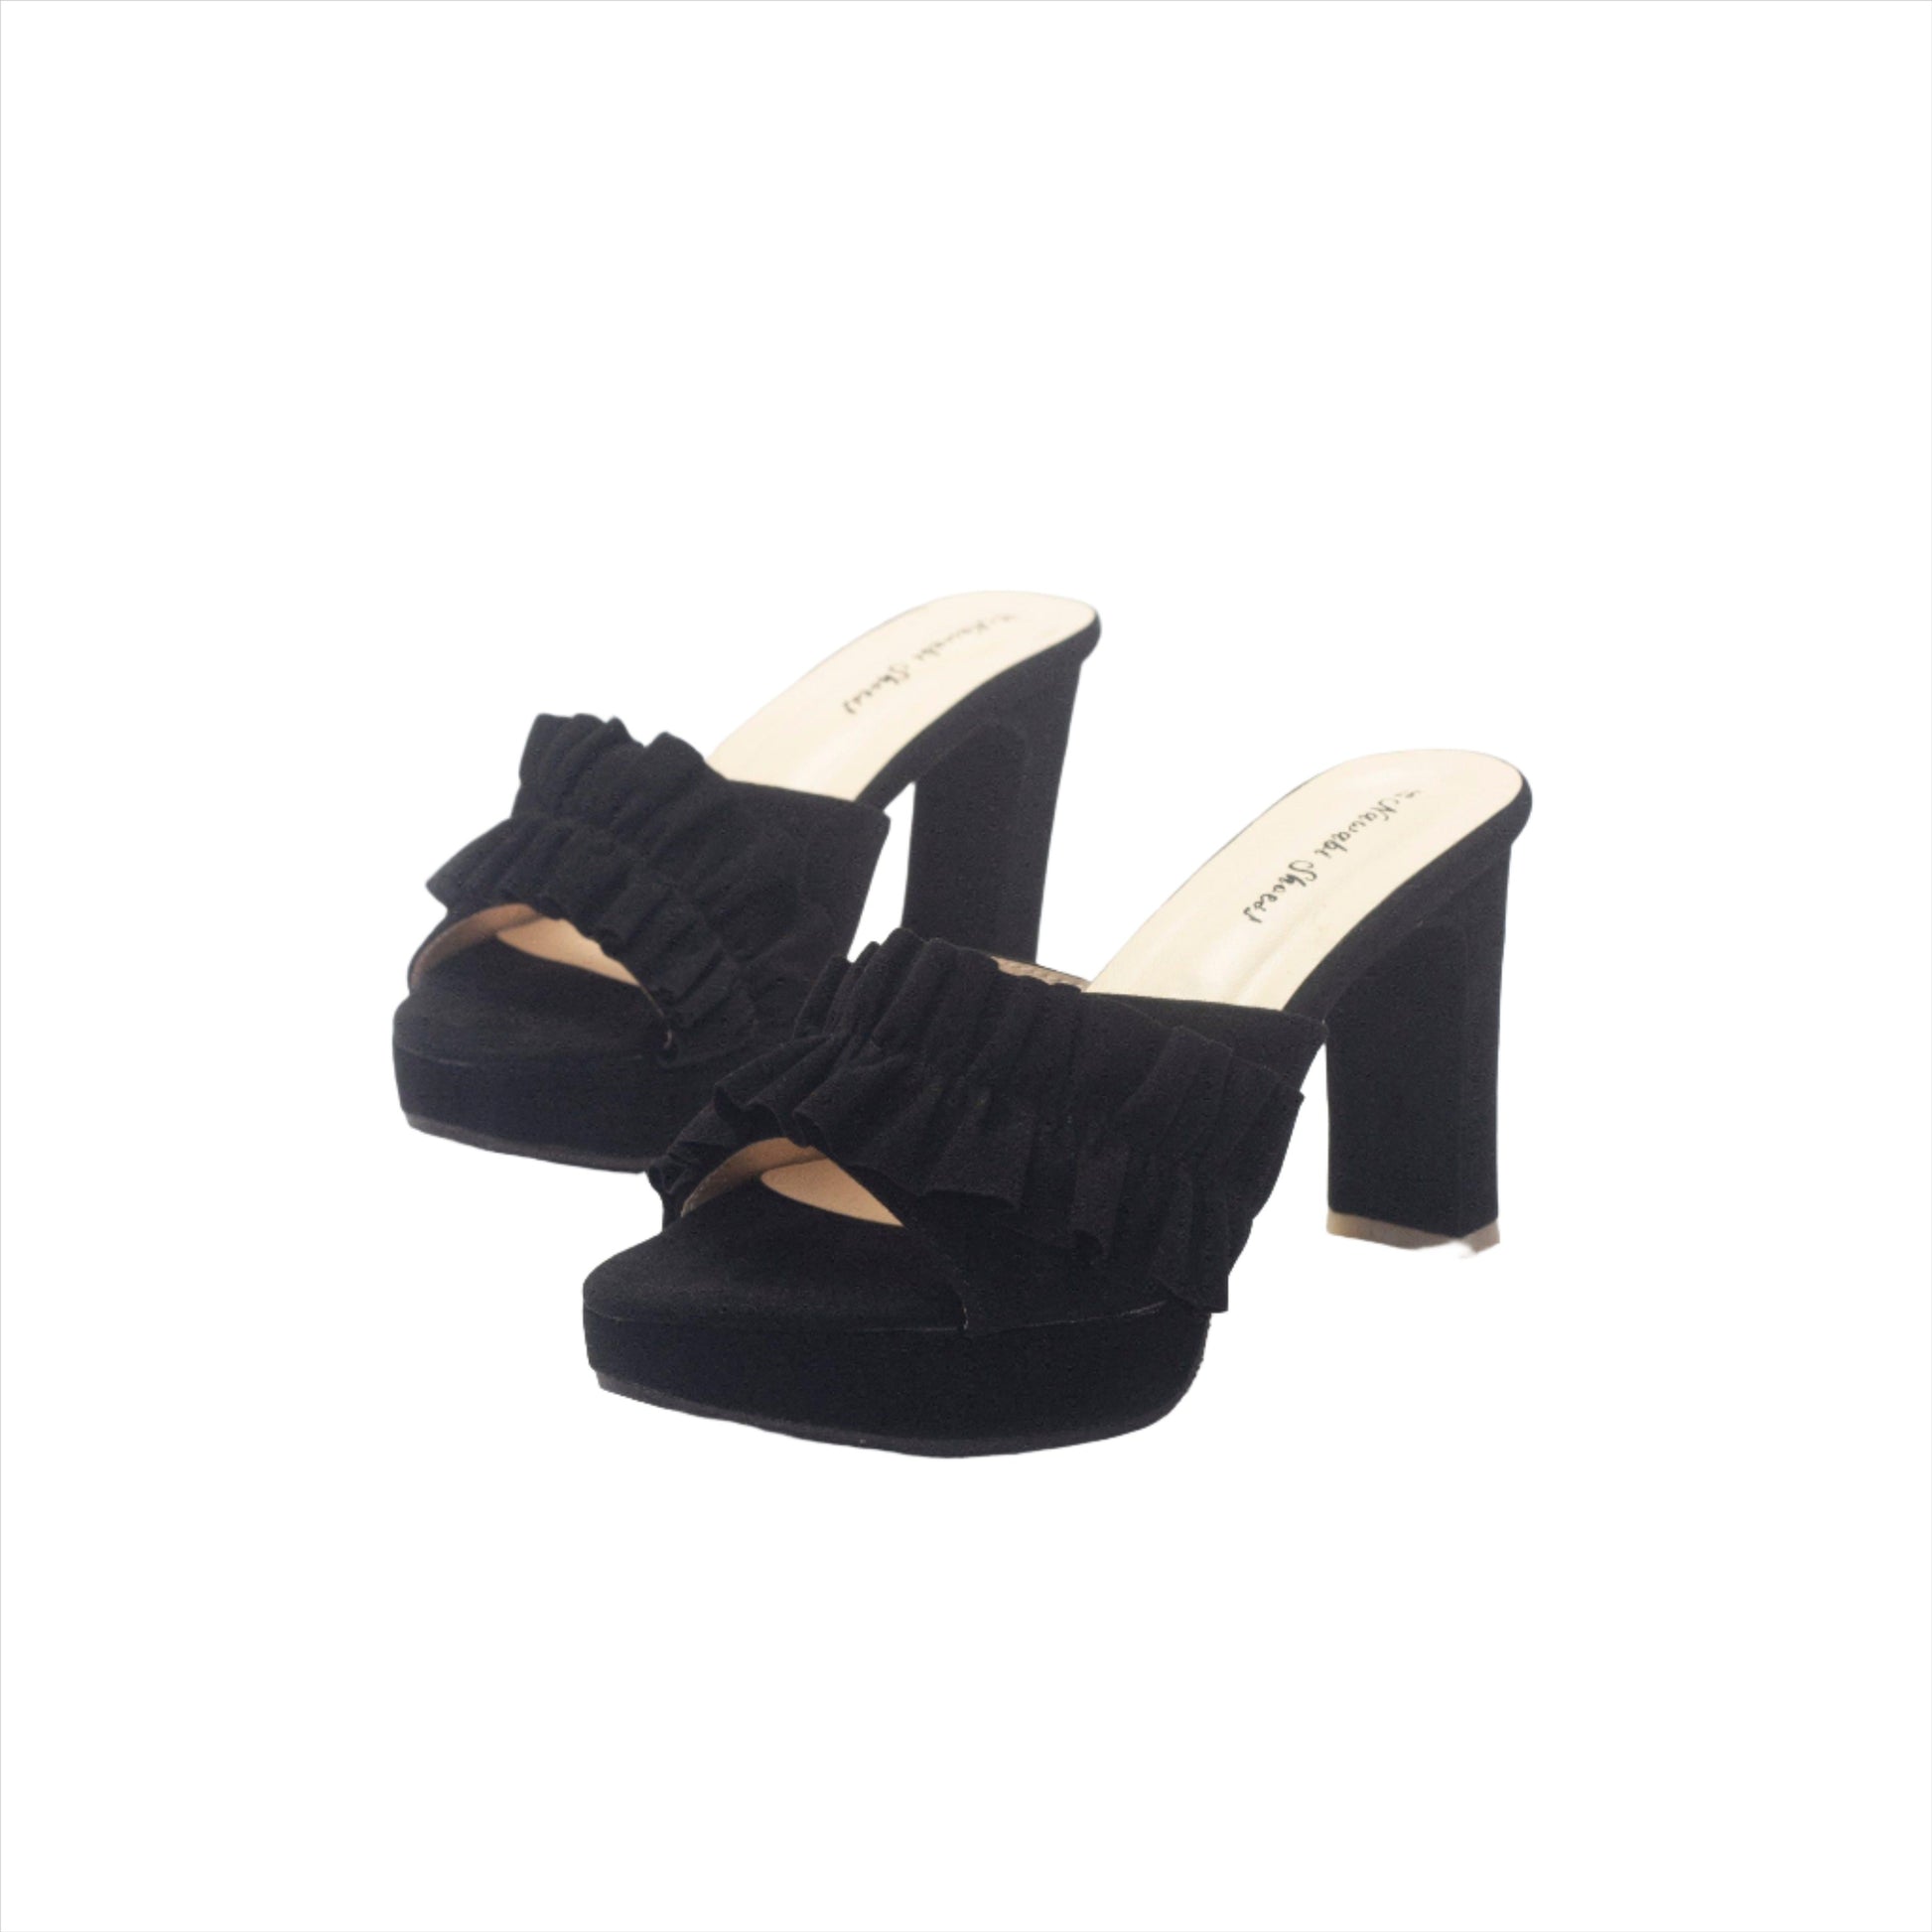 Black Stylish and Comfortable Balance Heels-Nawabi Shoes BD